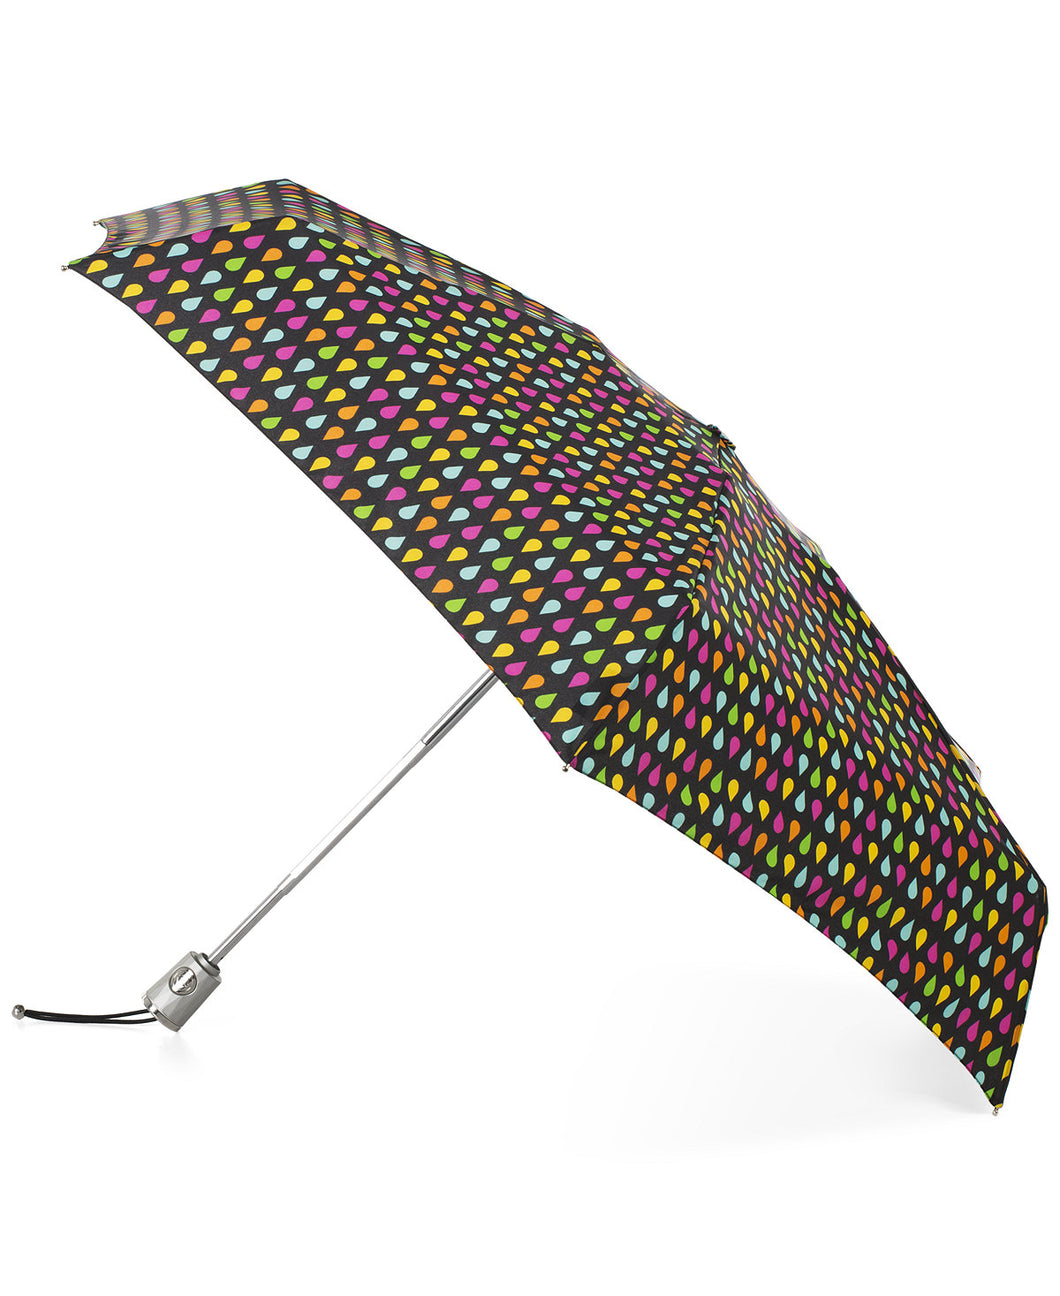 Totes SunGuard Auto Open Close Compact Umbrella with NeverWet